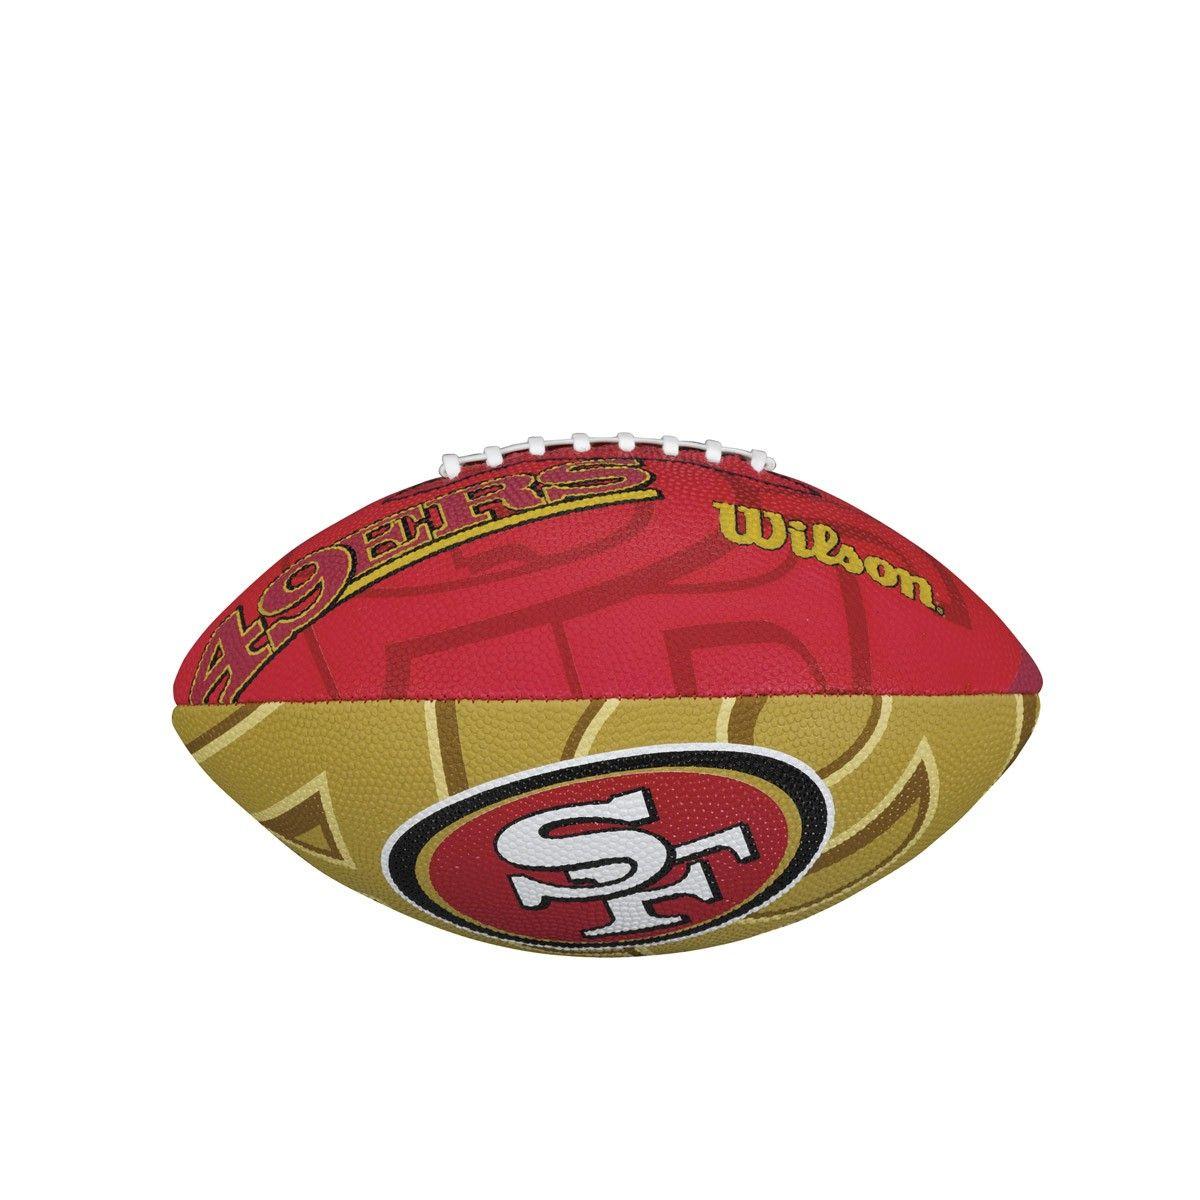 49ers Football Logo - NFL TEAM LOGO JUNIOR SIZE FOOTBALL FRANCISCO 49ERS. Wilson